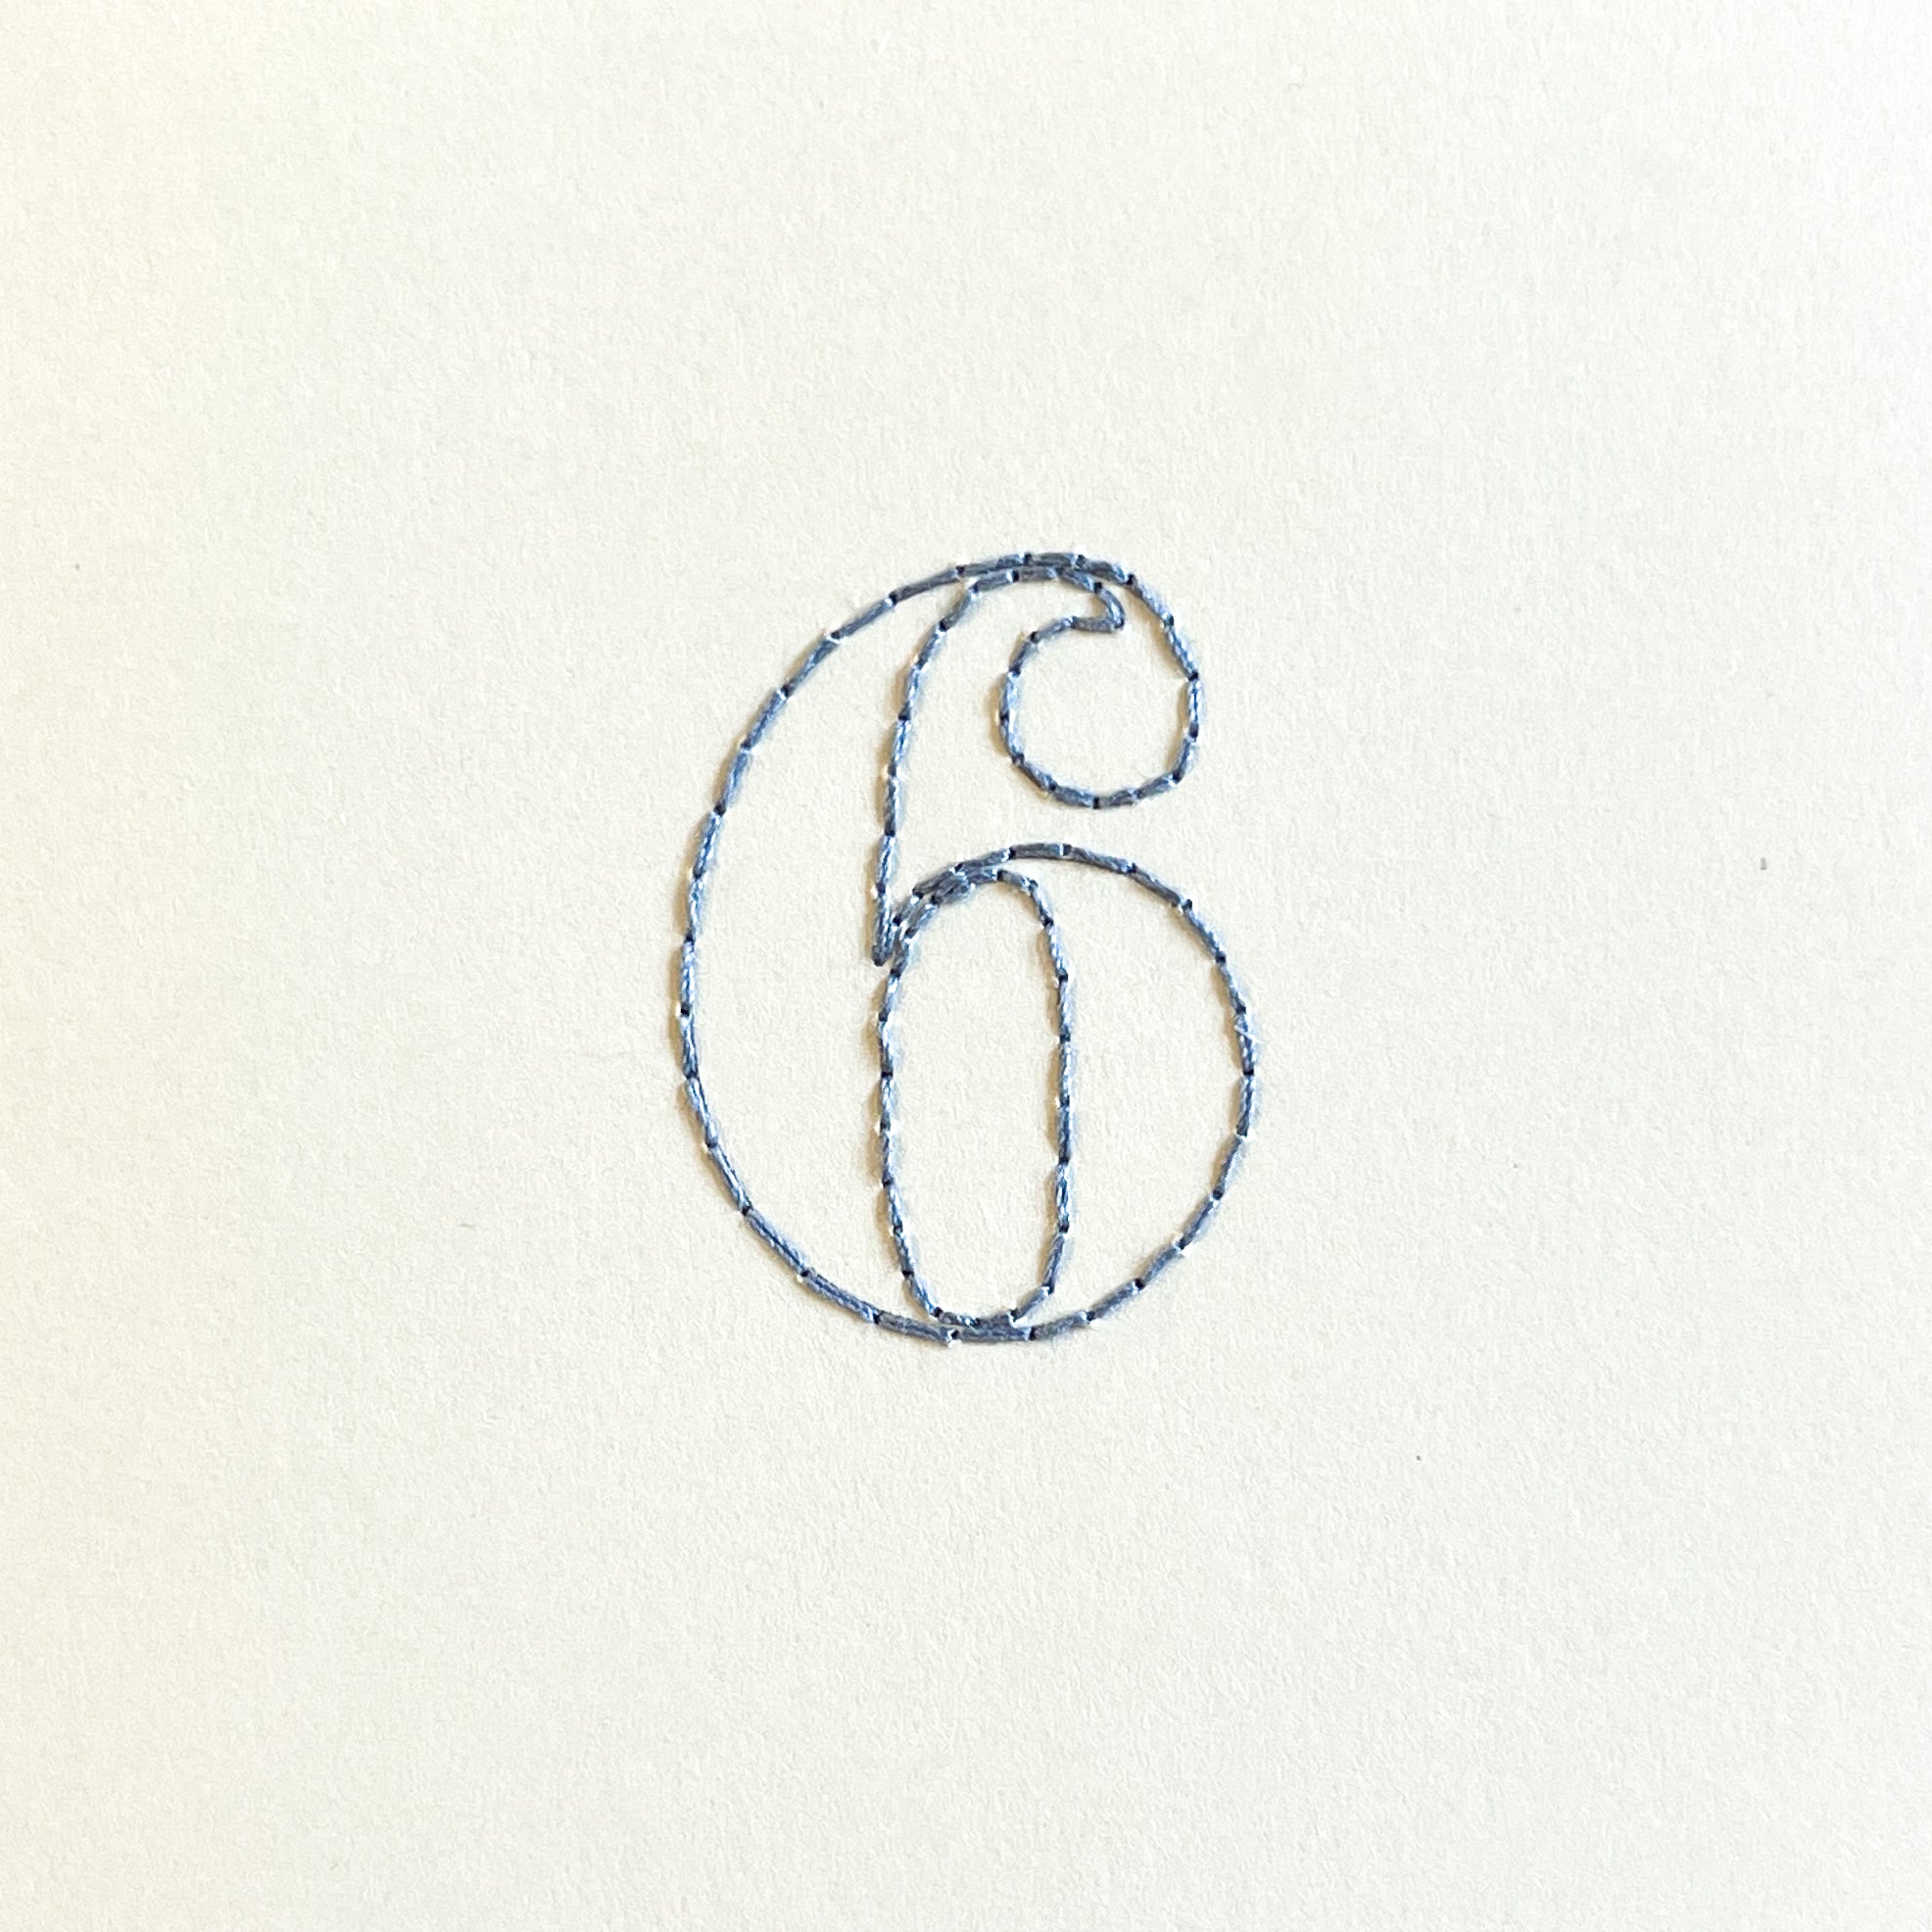 'Number' card